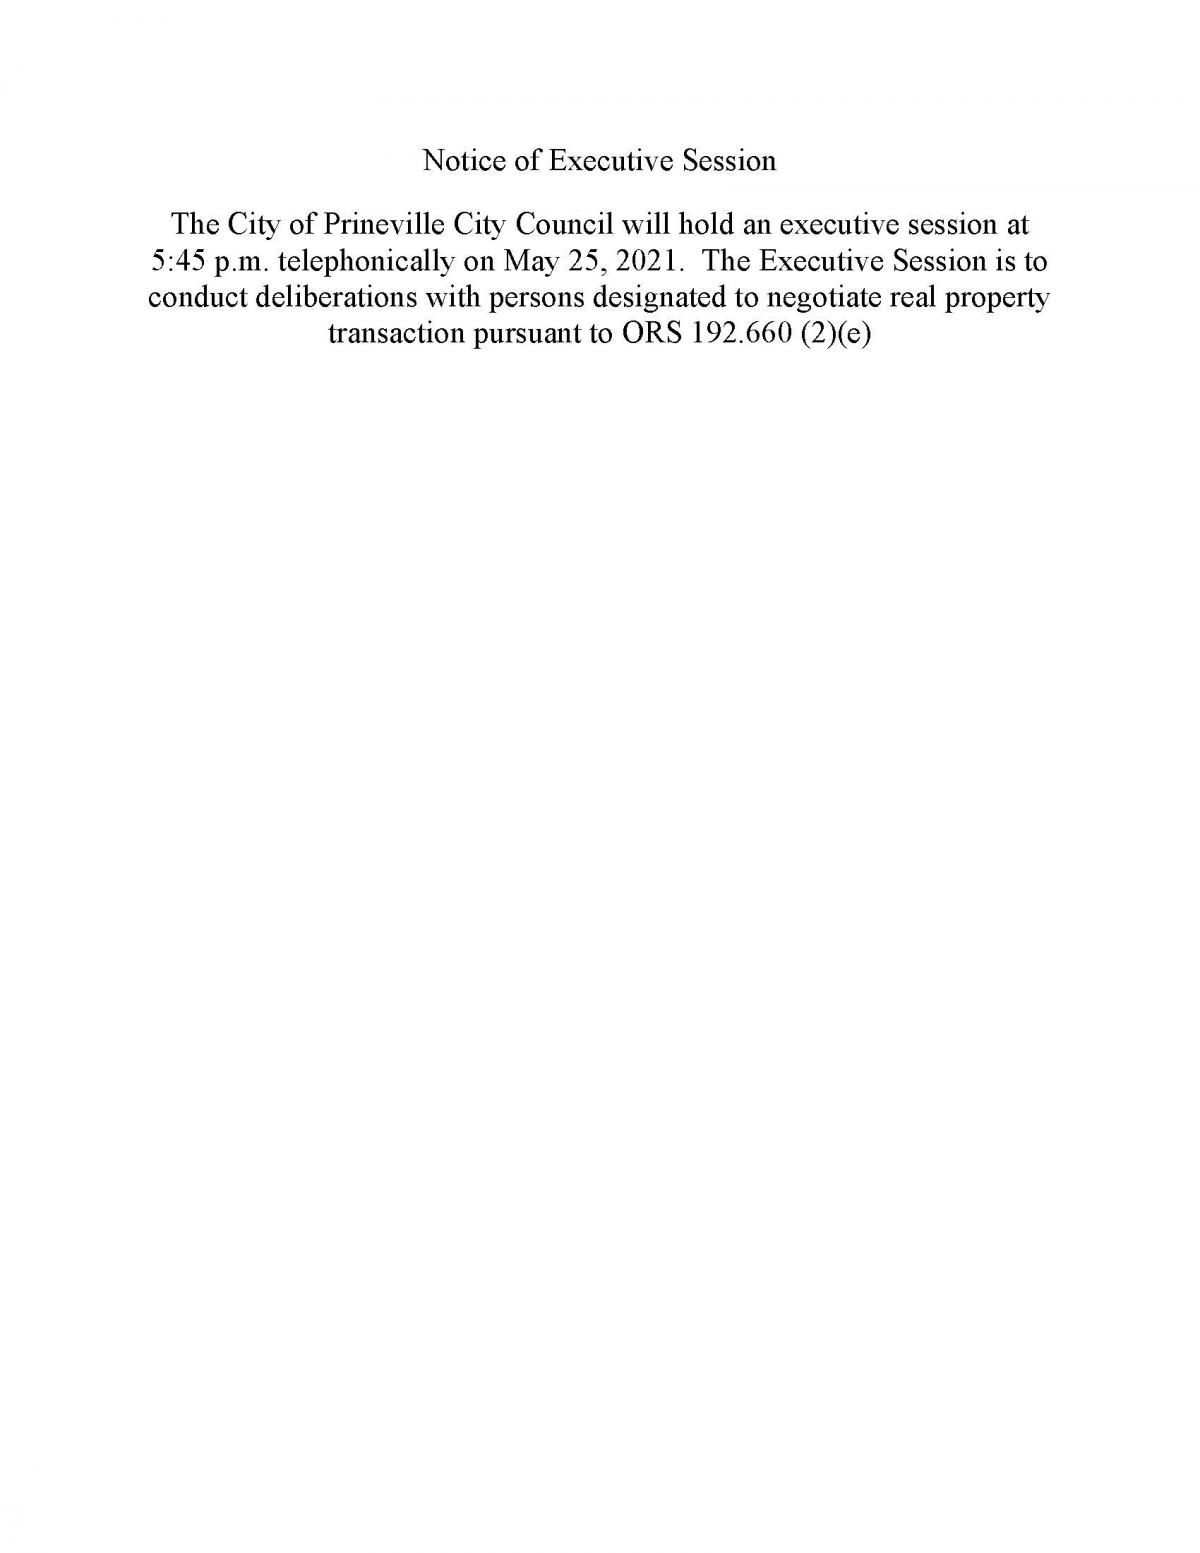 Public Notice of Council Executive Session 5-25-2021